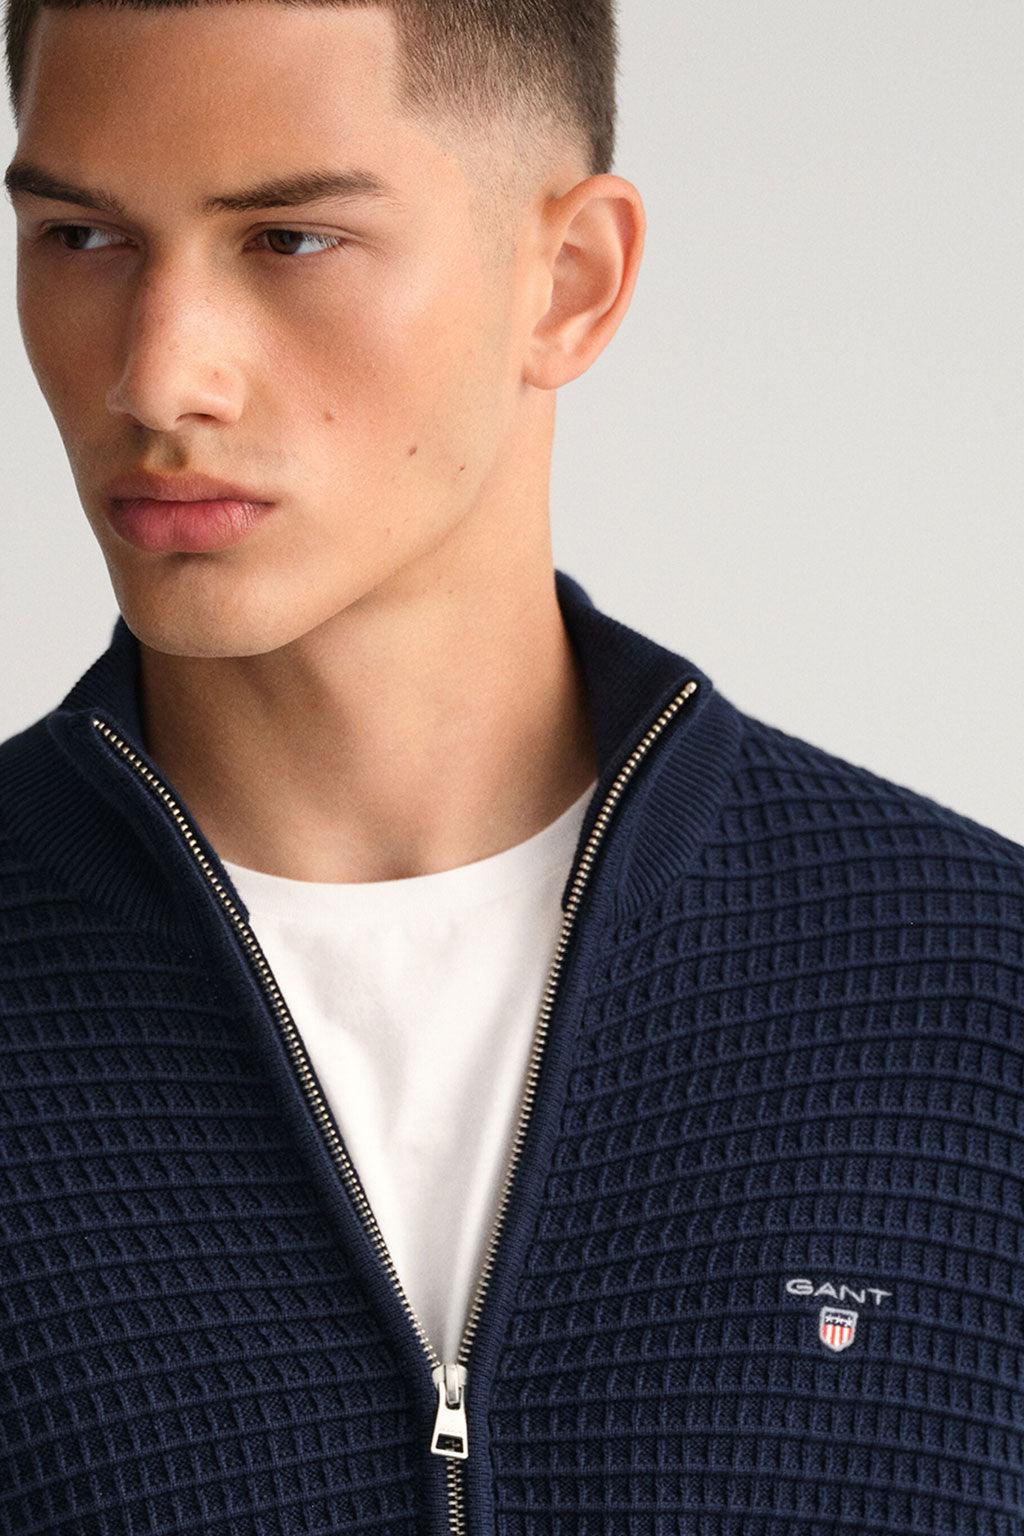 Gant vest | Big Boss | the menswear concept